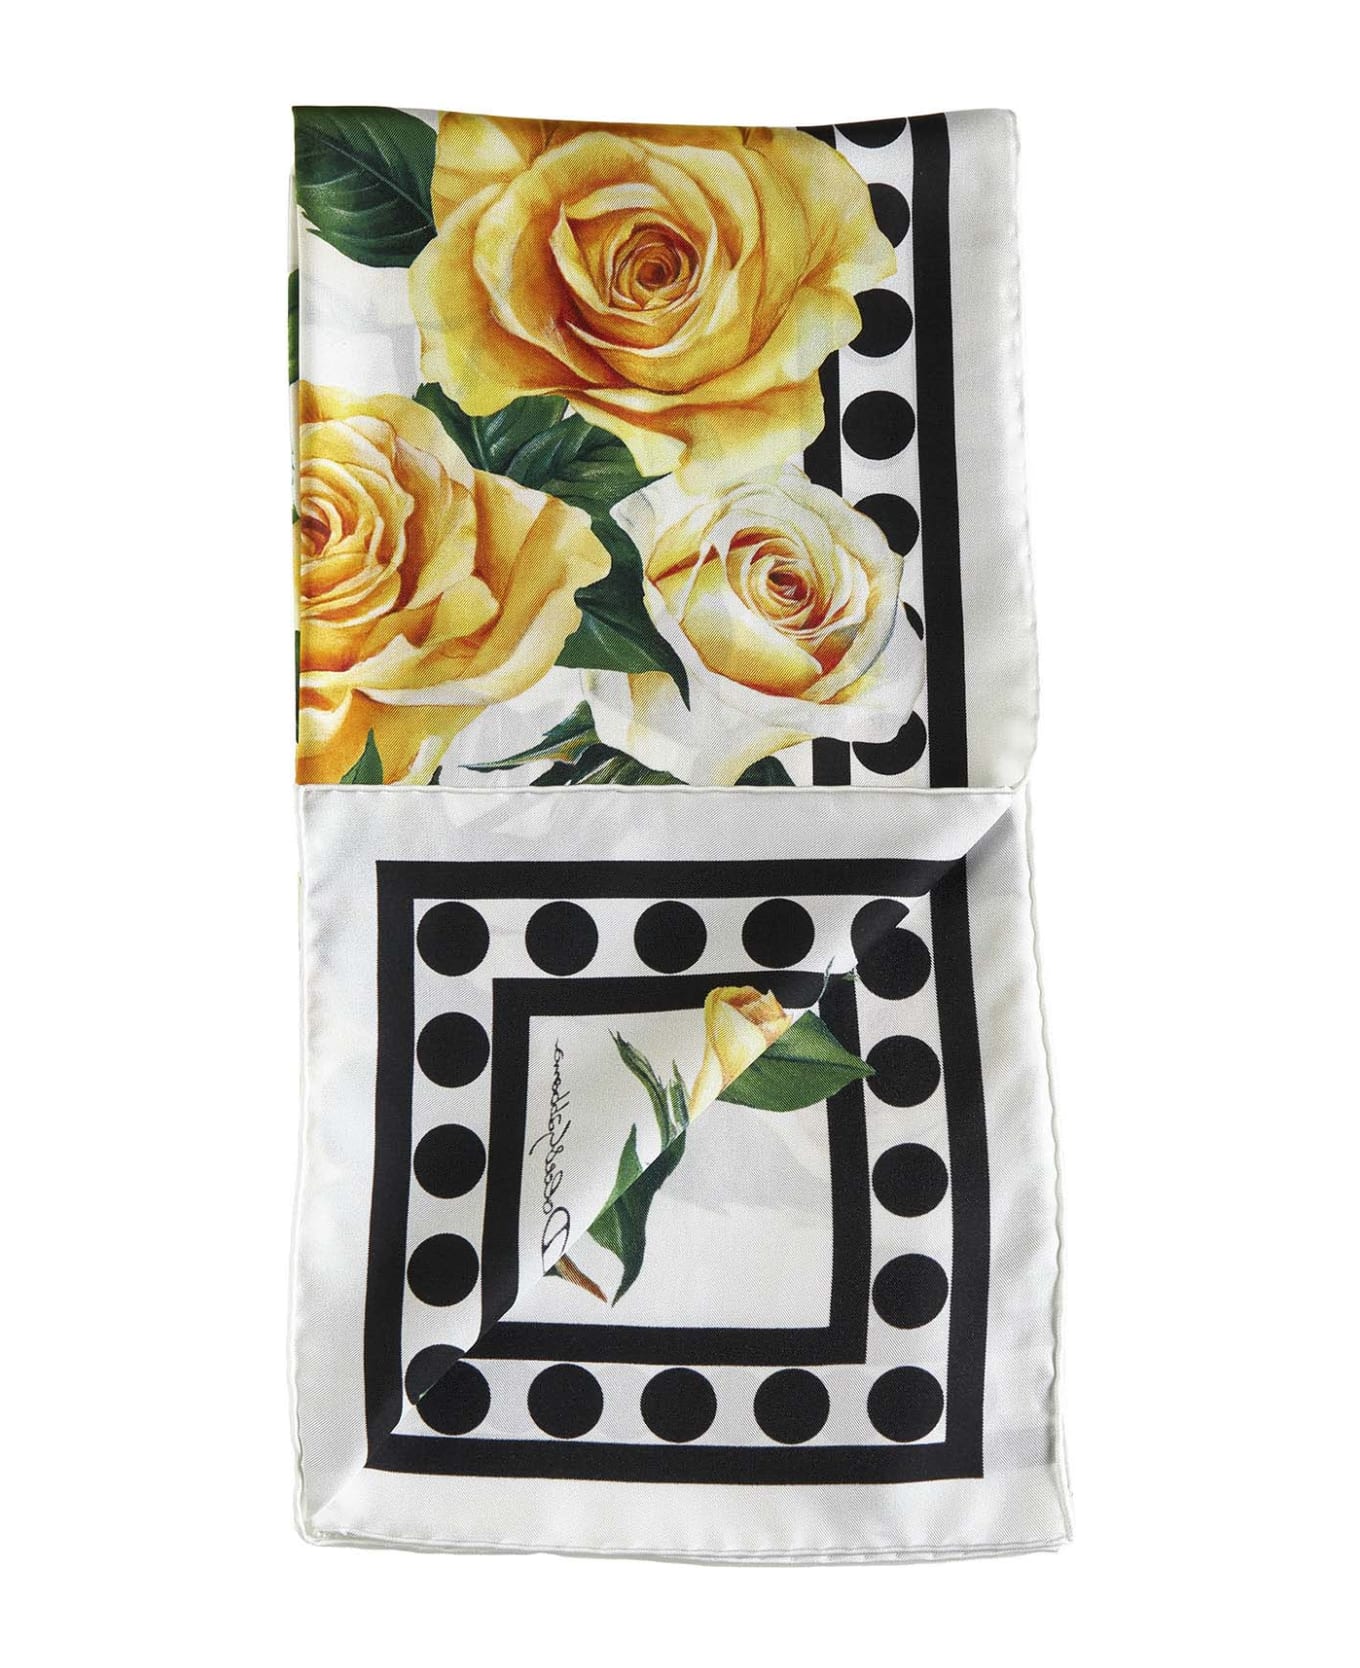 Dolce & Gabbana Silk Foulard - Rose gialle fdo bco